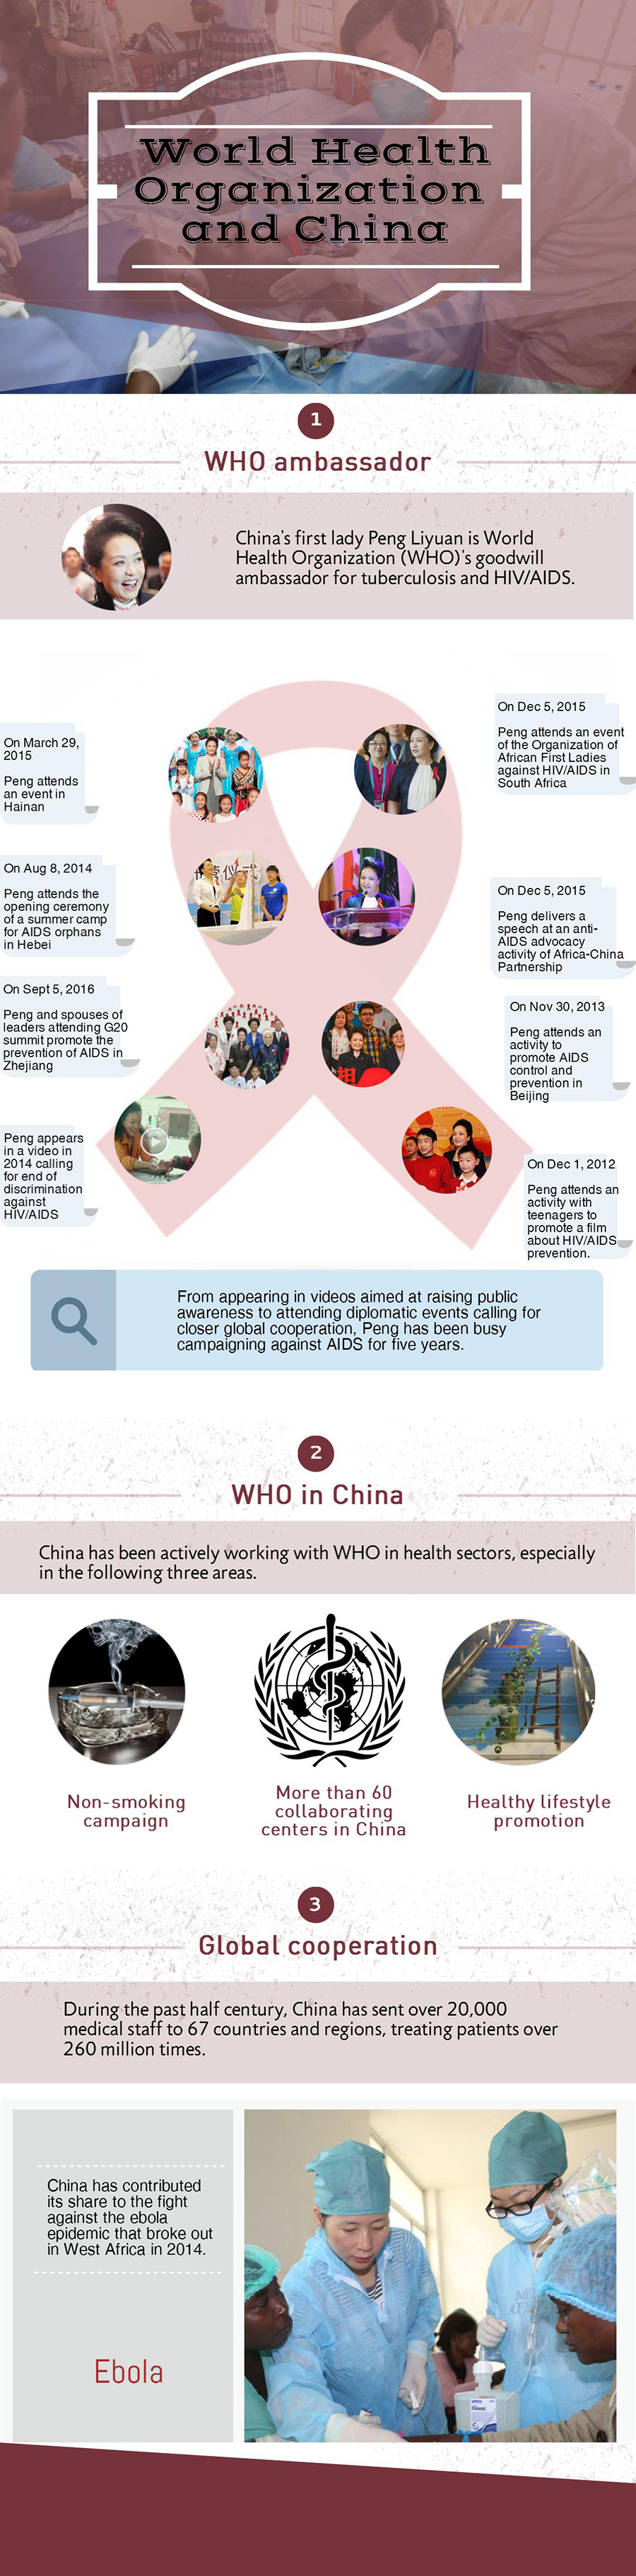 World Health Organization's China connection